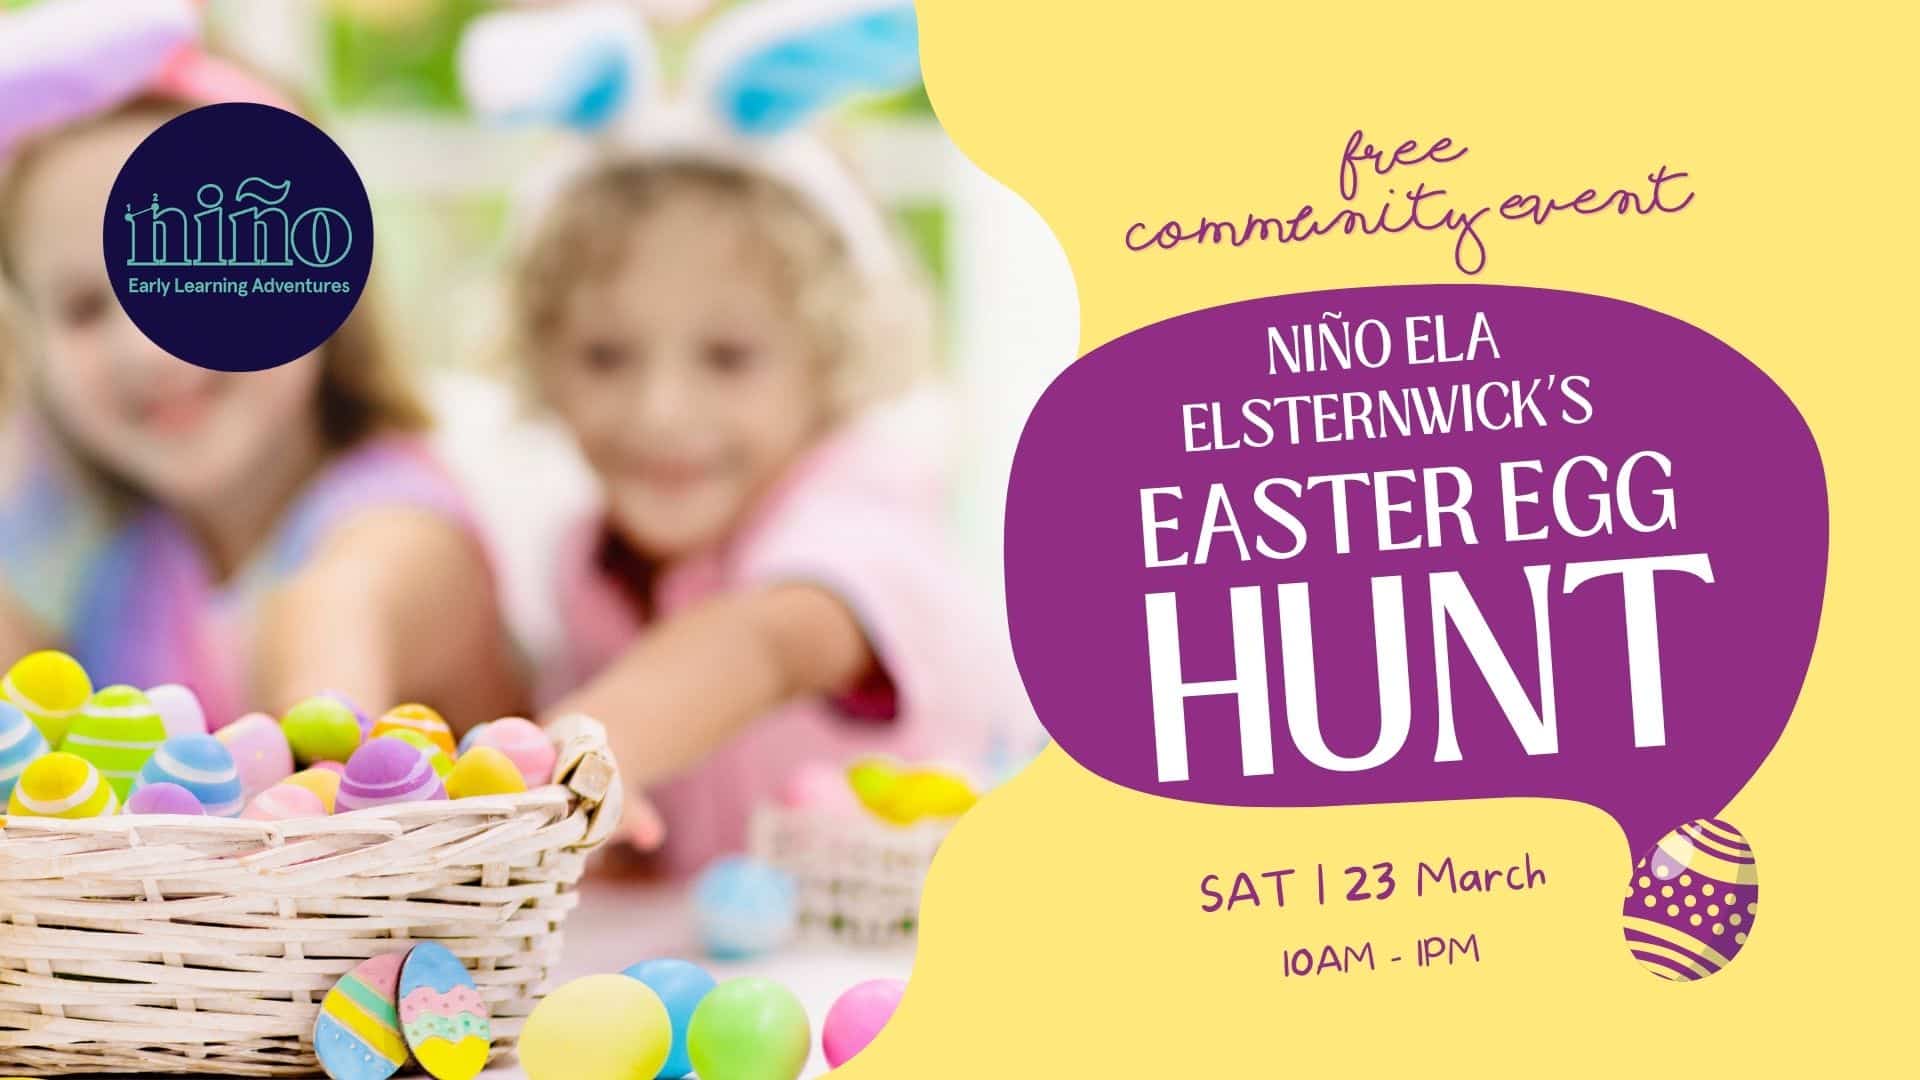 Nino ELA Elsternwick Community Egg Hunt